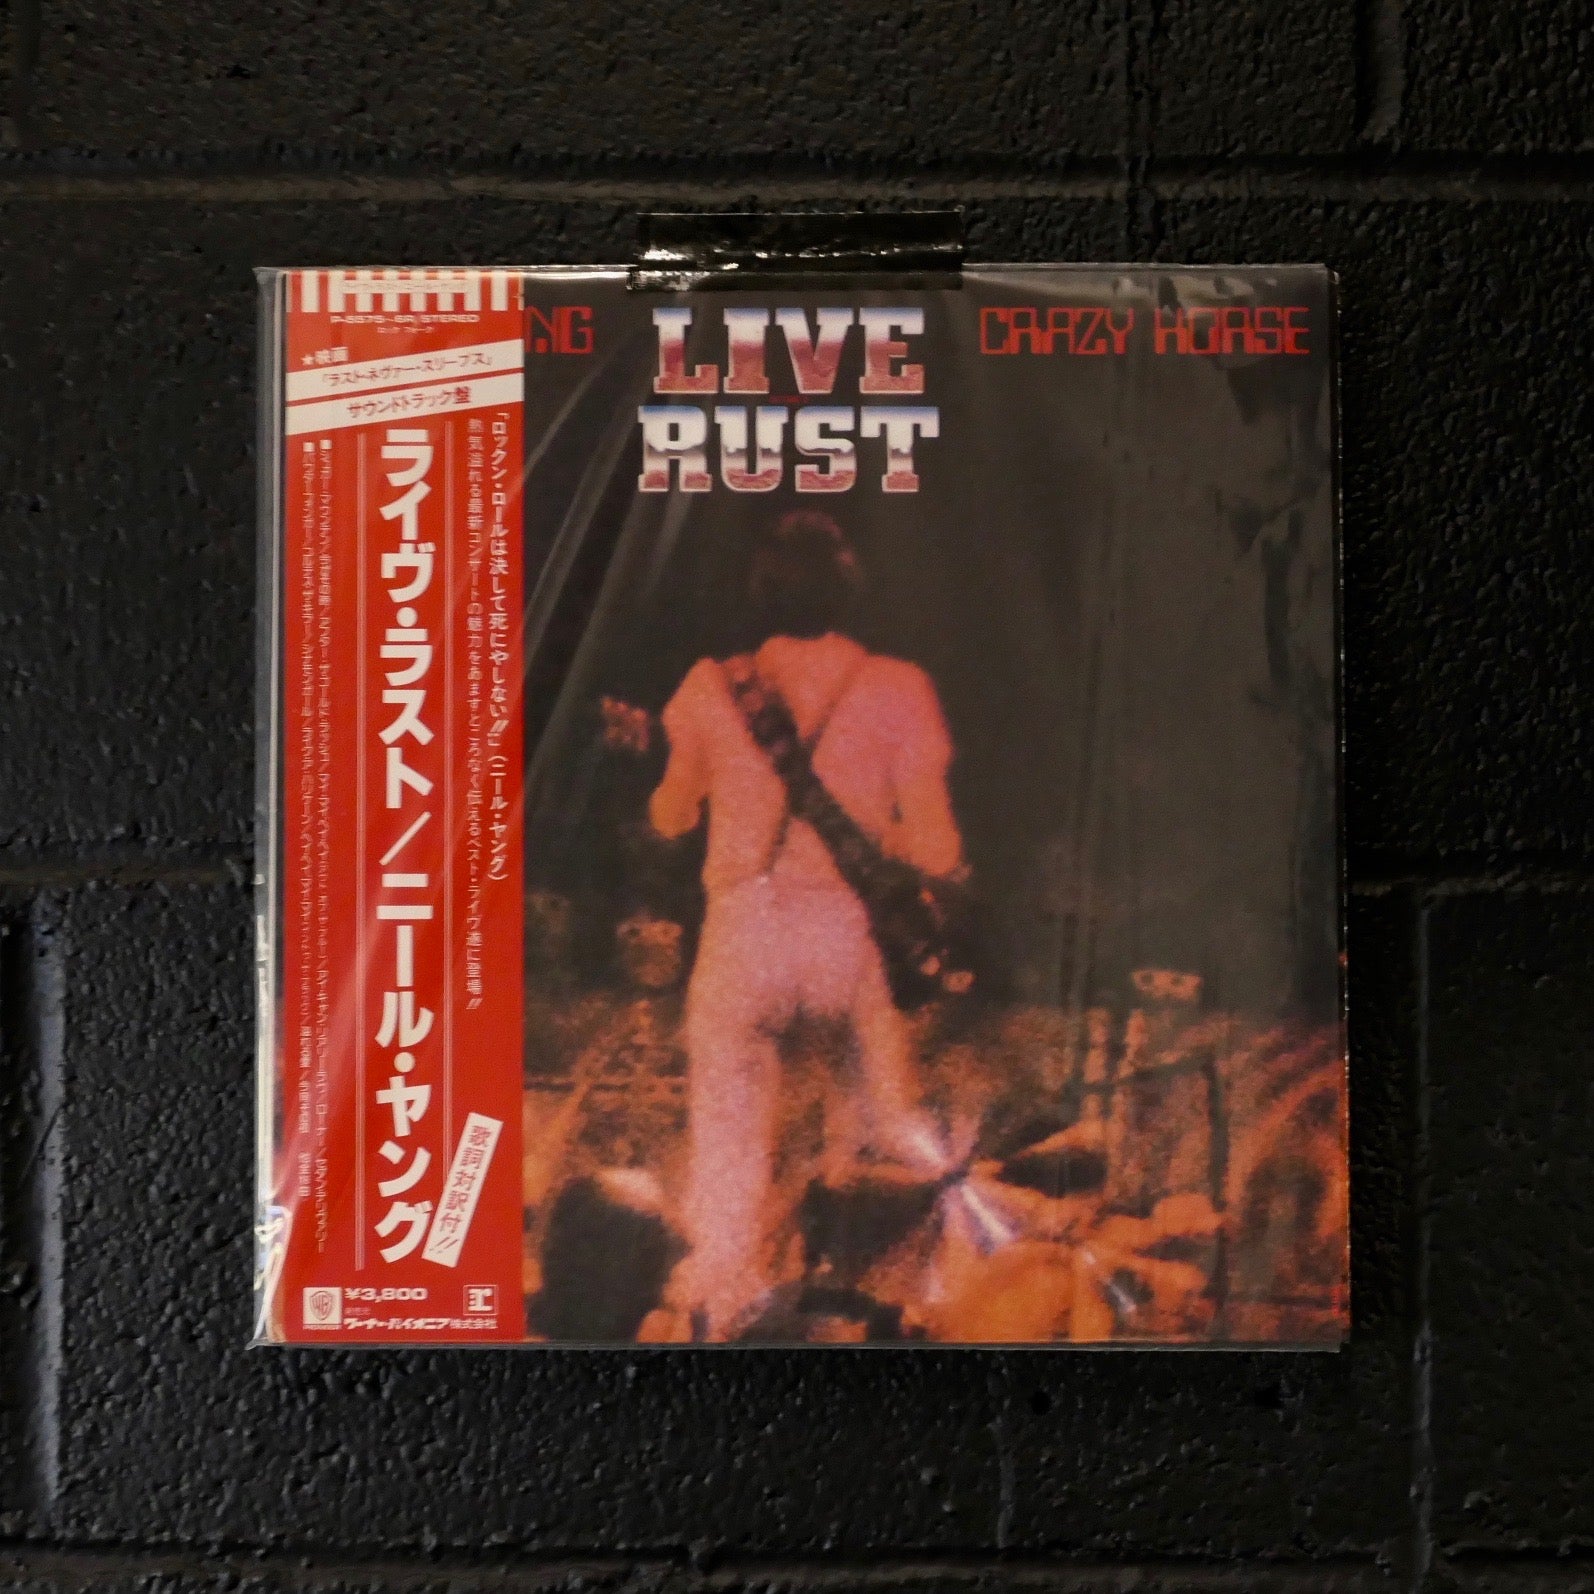 Live Rust (Japan 2LP set with OBI)